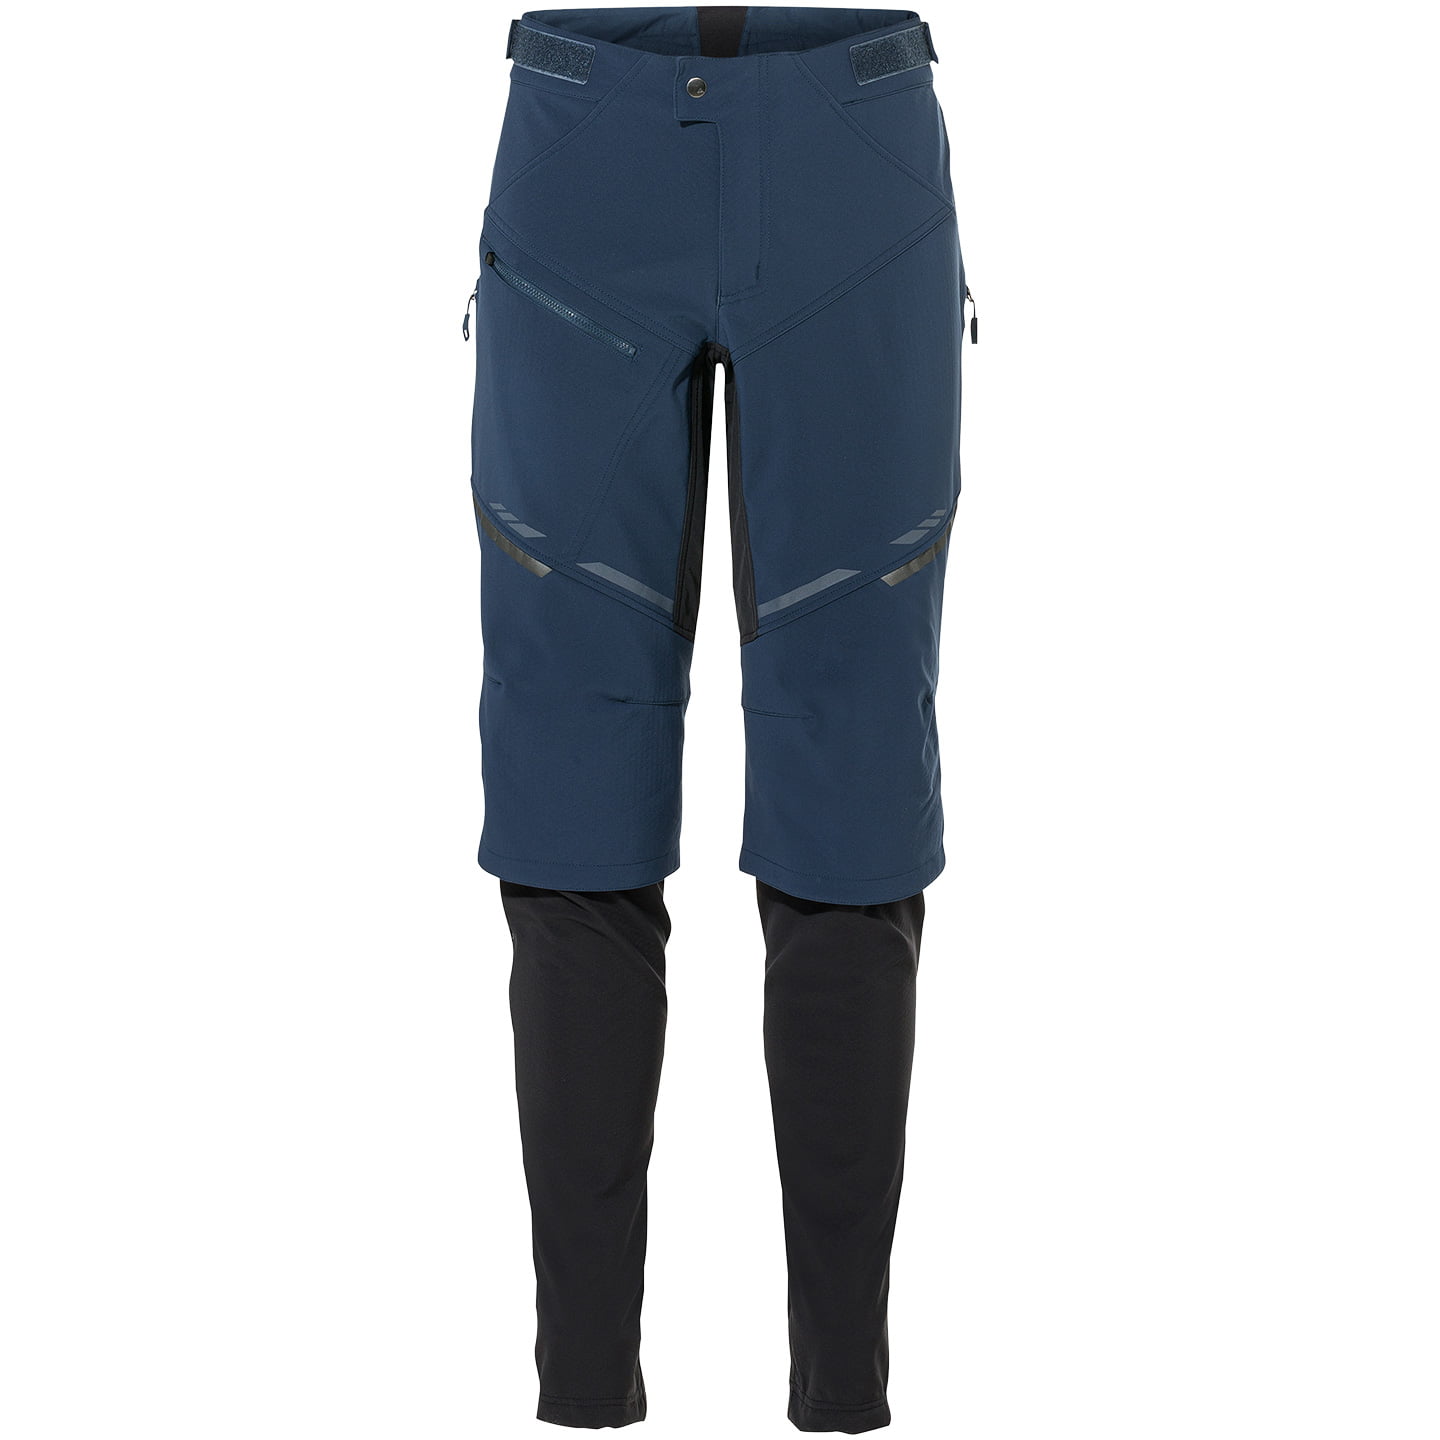 Virt II Long Bike Trousers w/o Pad Long Bike Pants, for men, size M, Cycle trousers, Cycle clothing